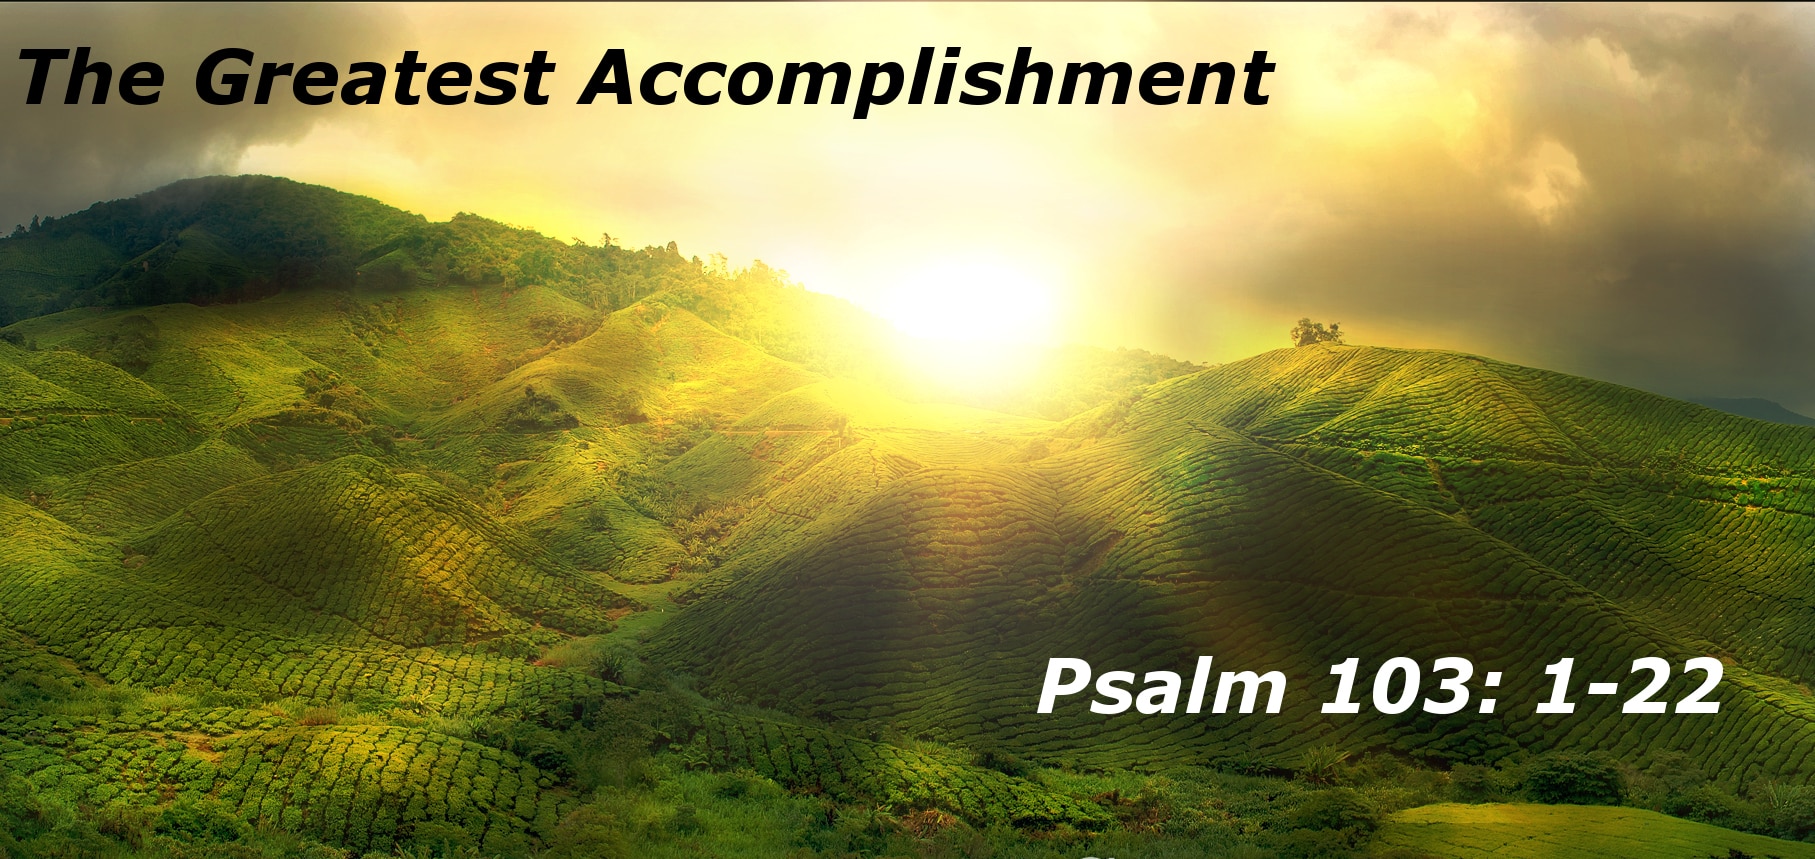 The Greatest Accomplishment rising-sun-green-hills